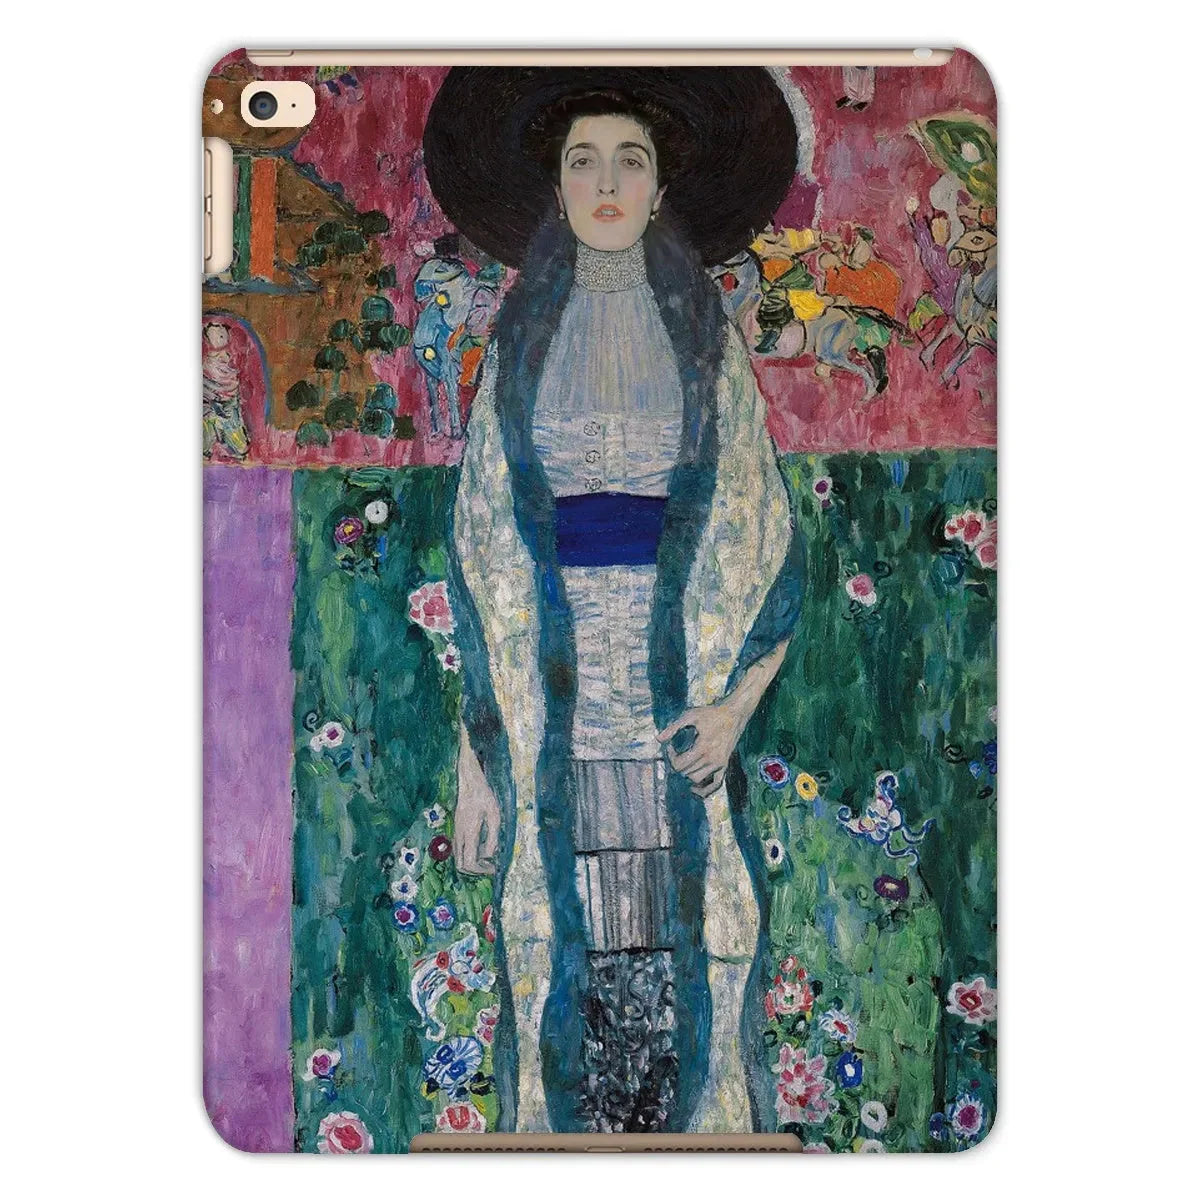 Adele Bloch - bauer By Gustav Klimt Aesthetic Ipad Case - Slim Designer Back Cover - Ipad Air 2 - Gloss - Tablet